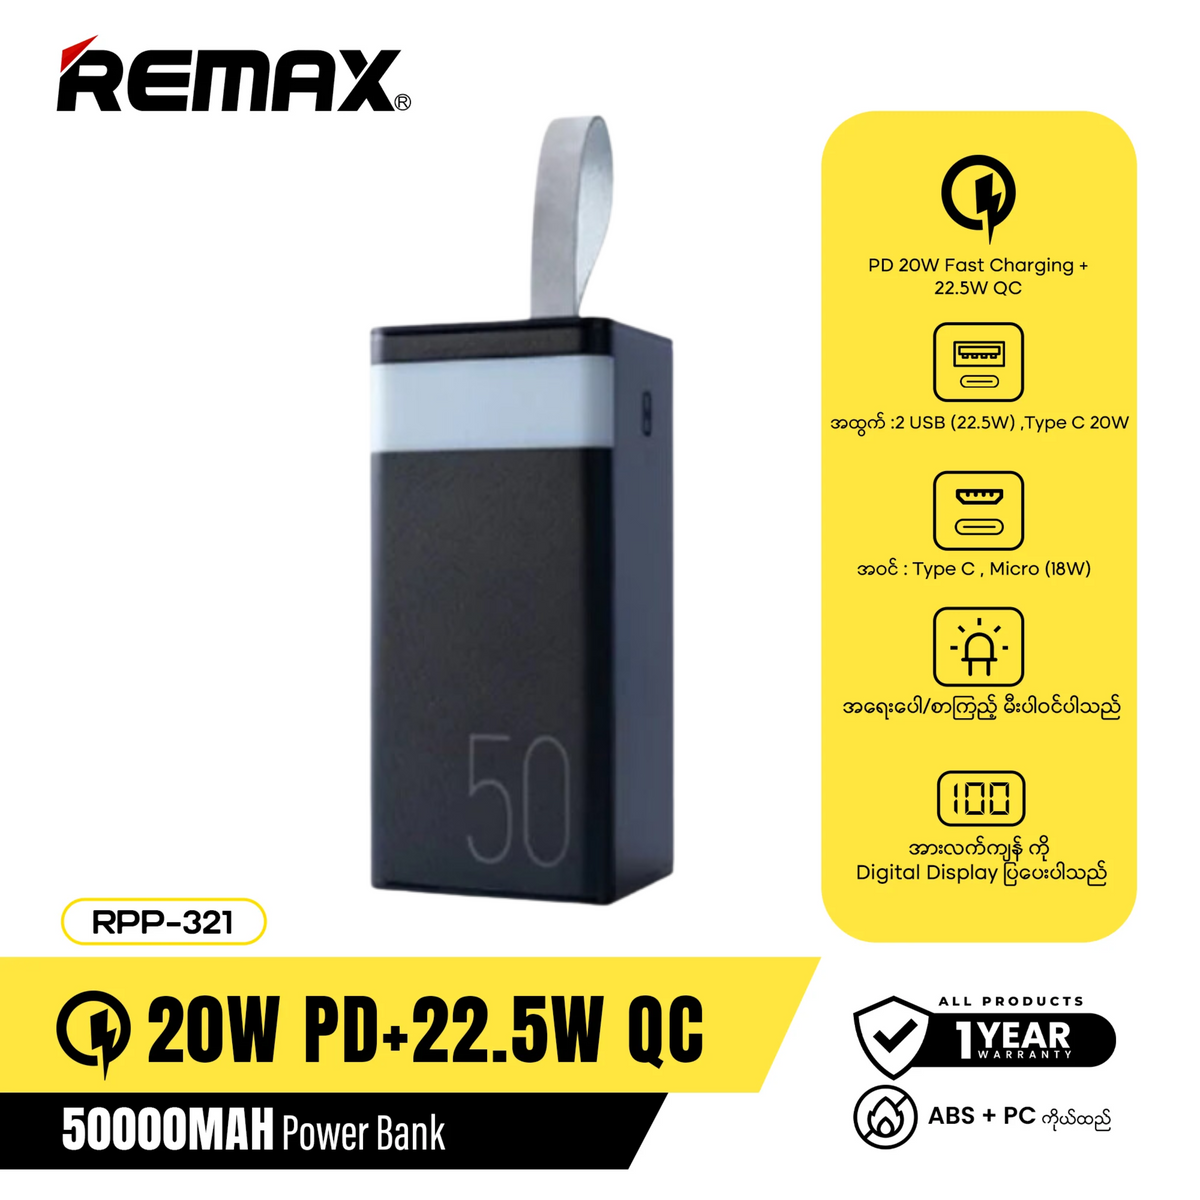 Remax RPP-321 50000mAh 20W PD + 22.5W QC Chinen Series Power Bank - Black